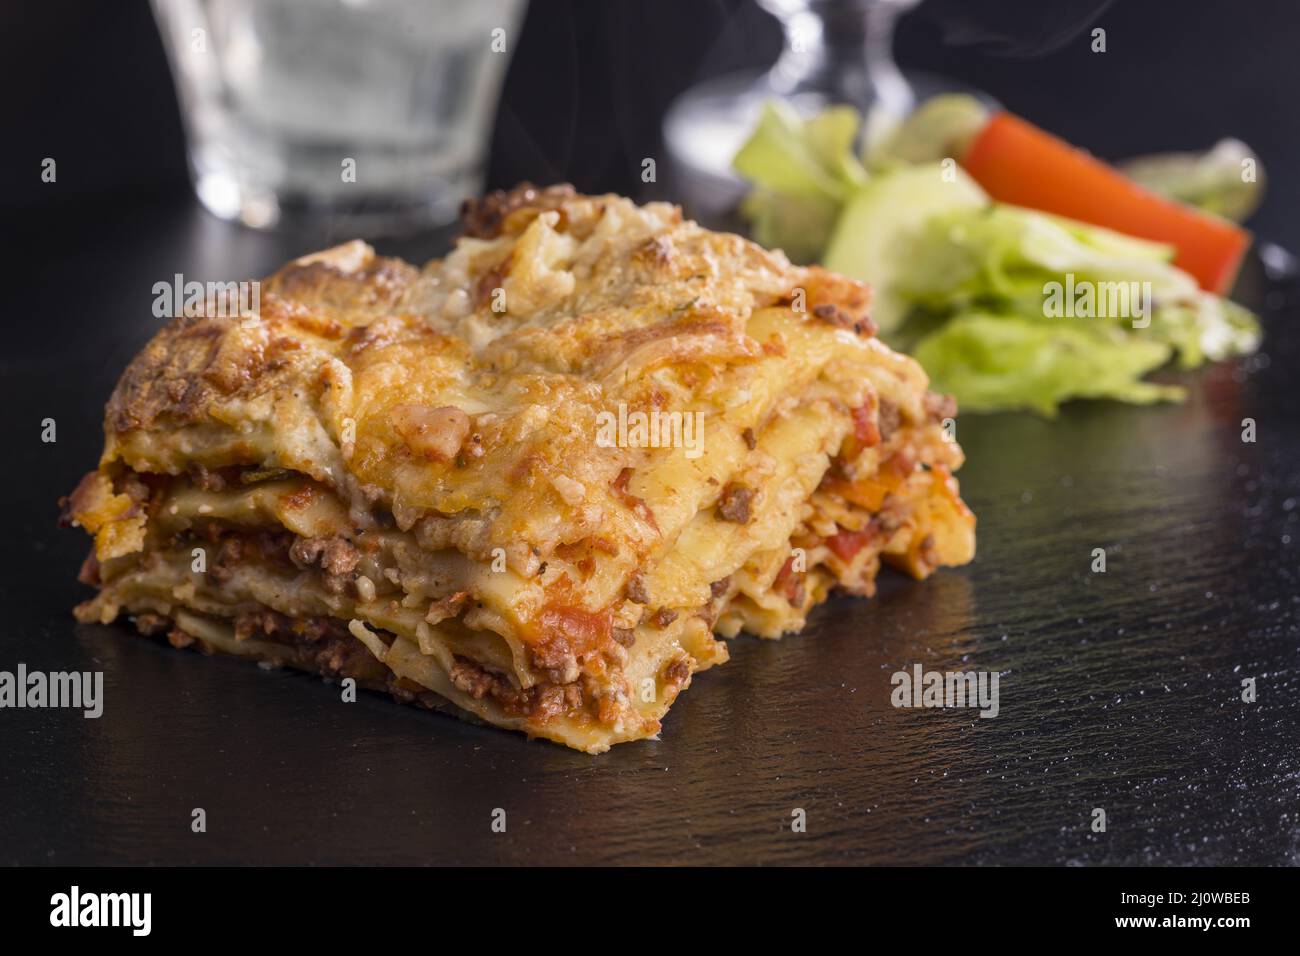 Fresh lasagna on black slate Stock Photo